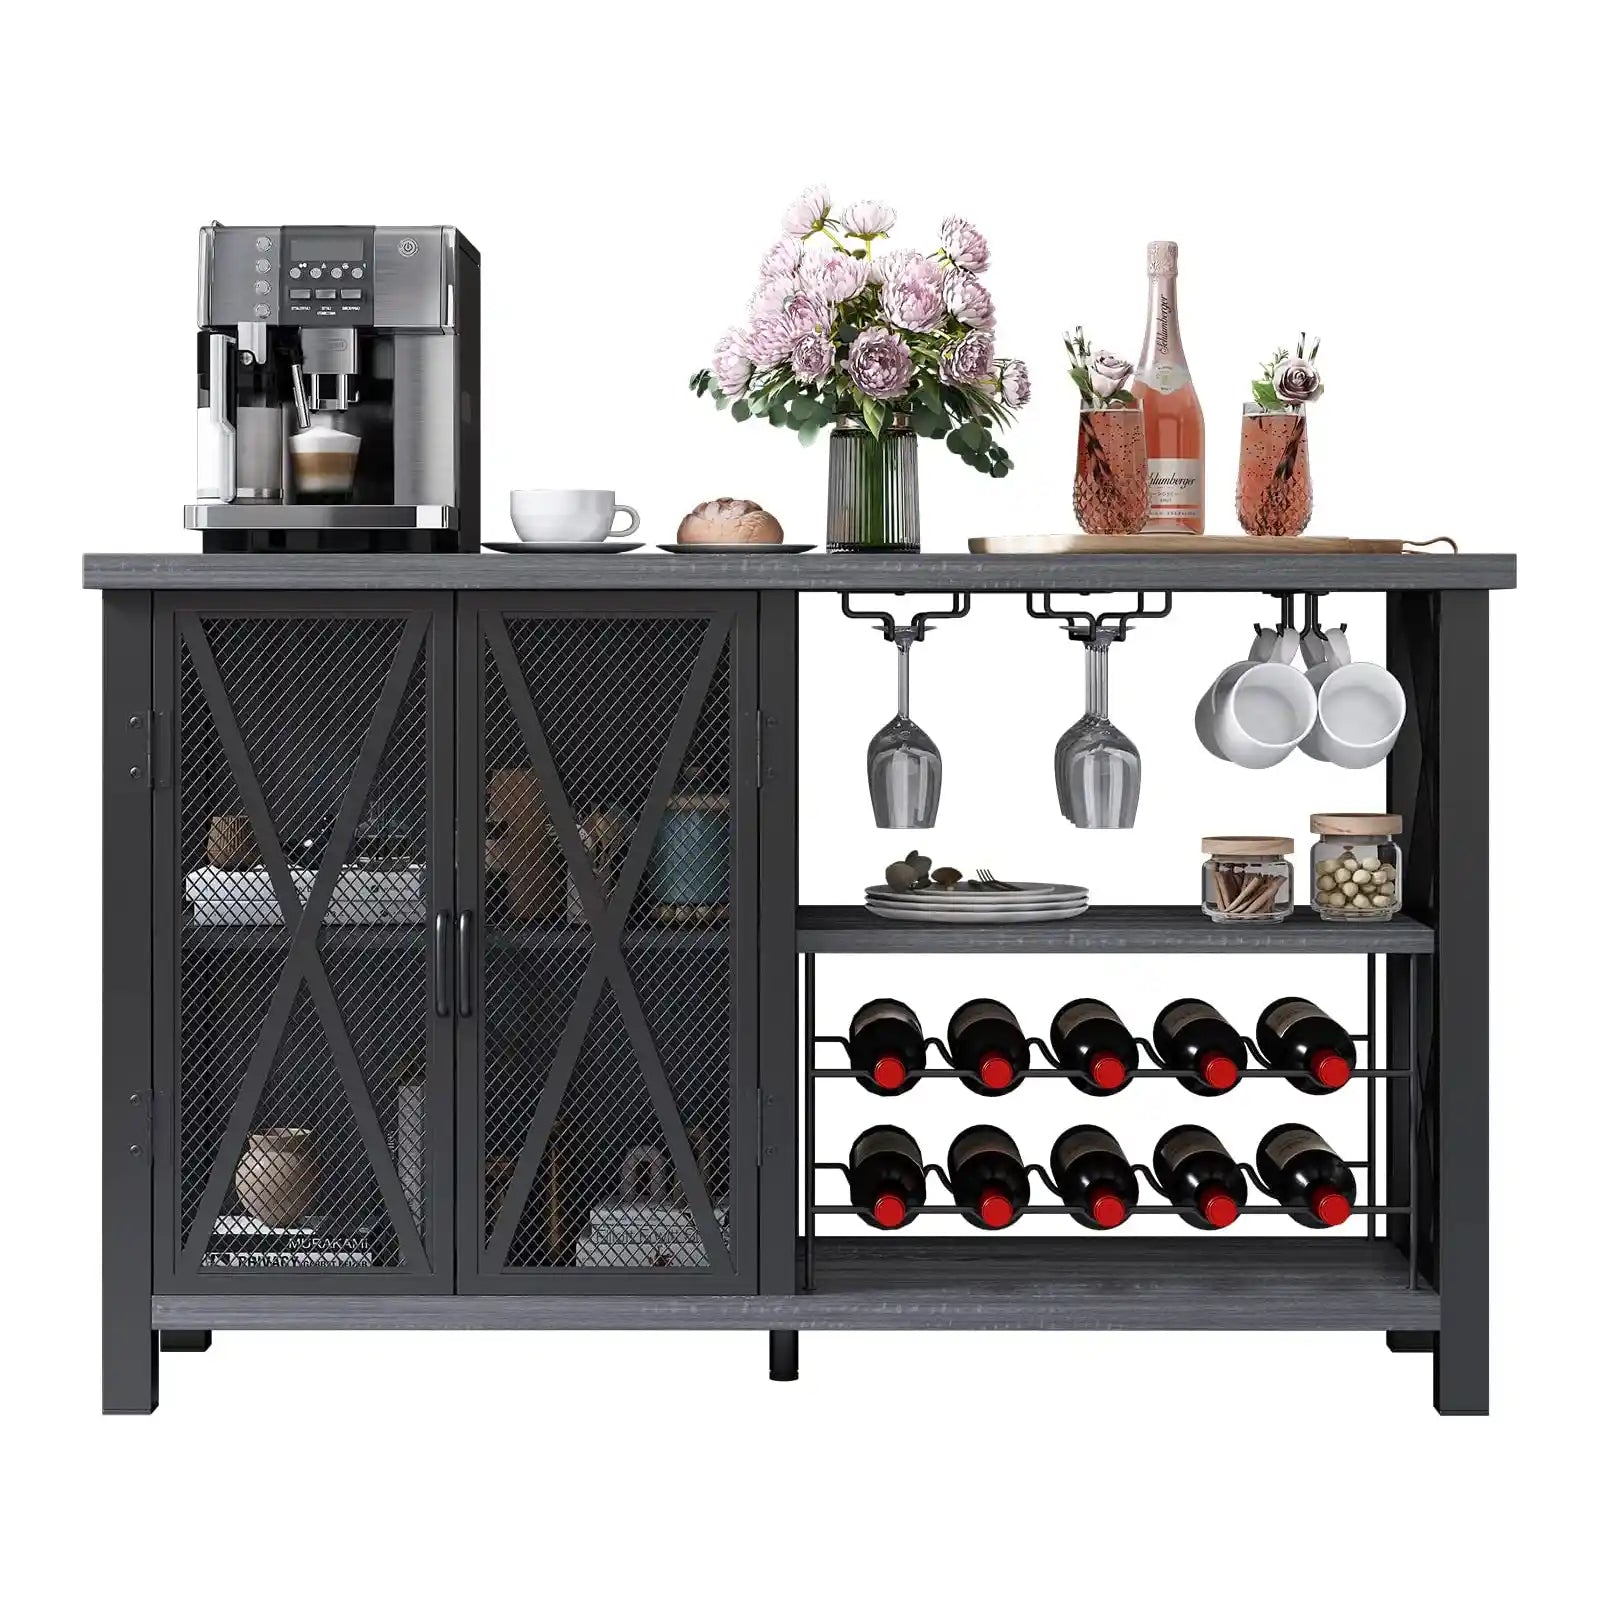 Freestanding Wine Bar Cabinet